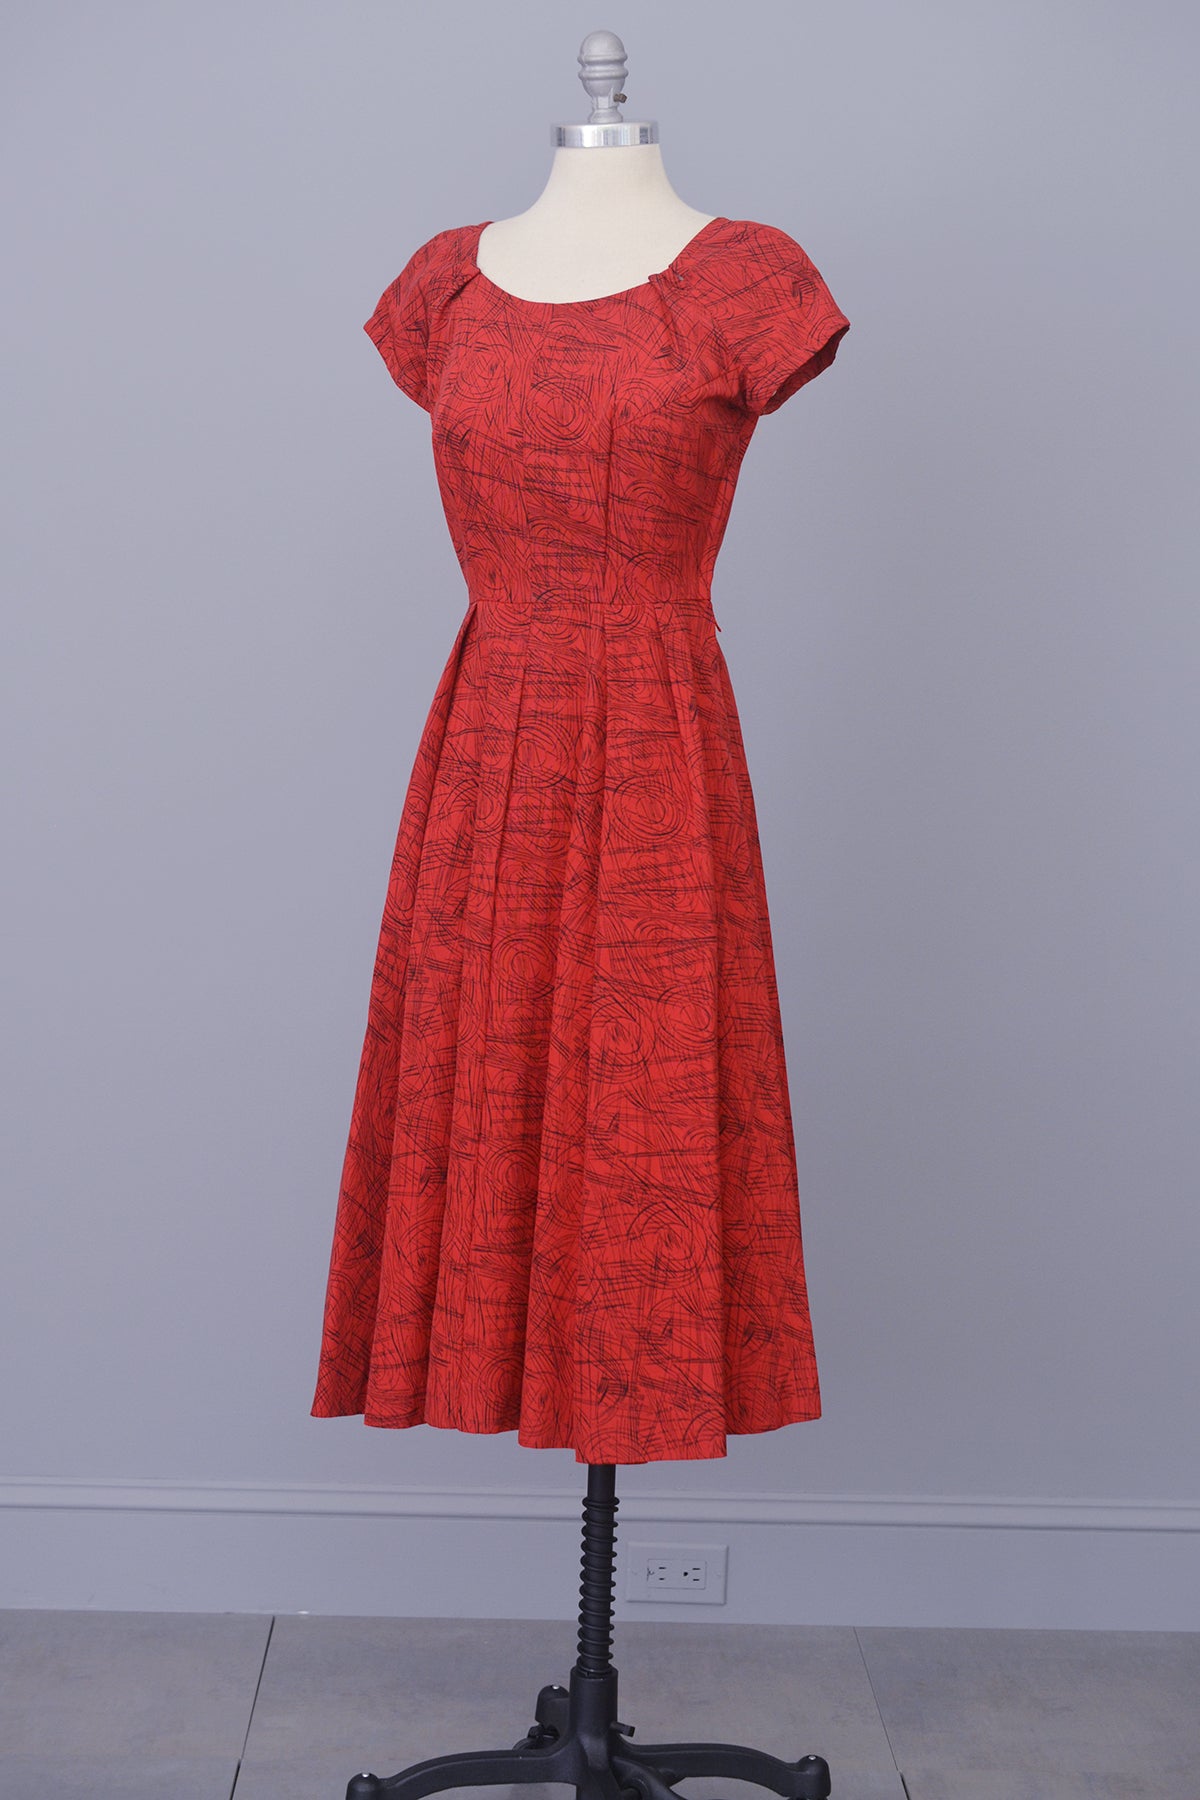 tankskib Moden At bygge 1950s Red with Black Atomic Sketch Print Dress | VintageVirtuosa